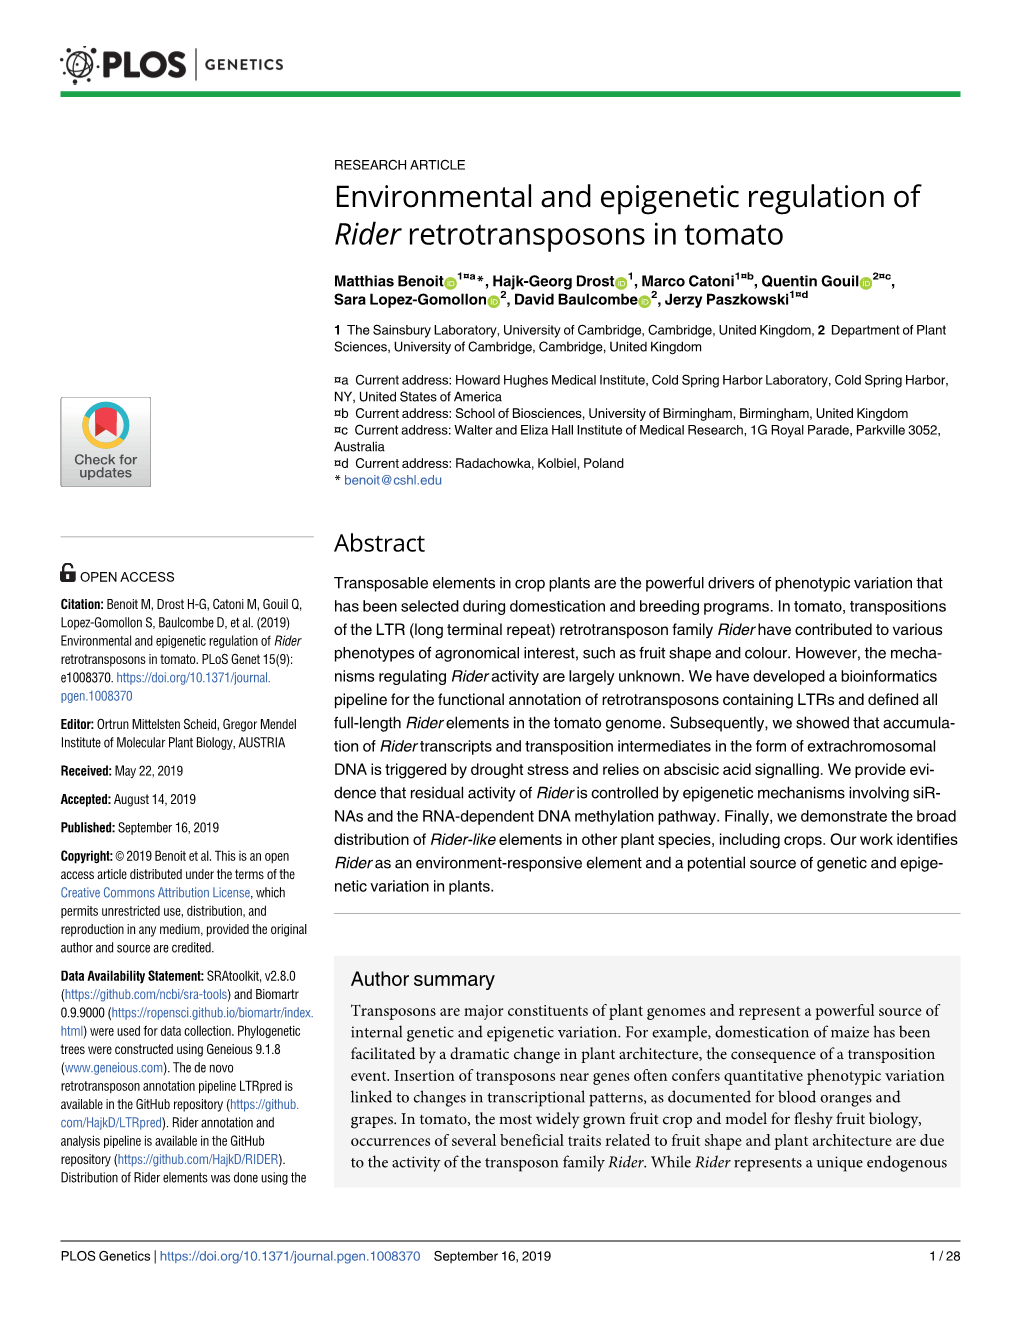 Environmental and Epigenetic Regulation of Rider Retrotransposons in Tomato